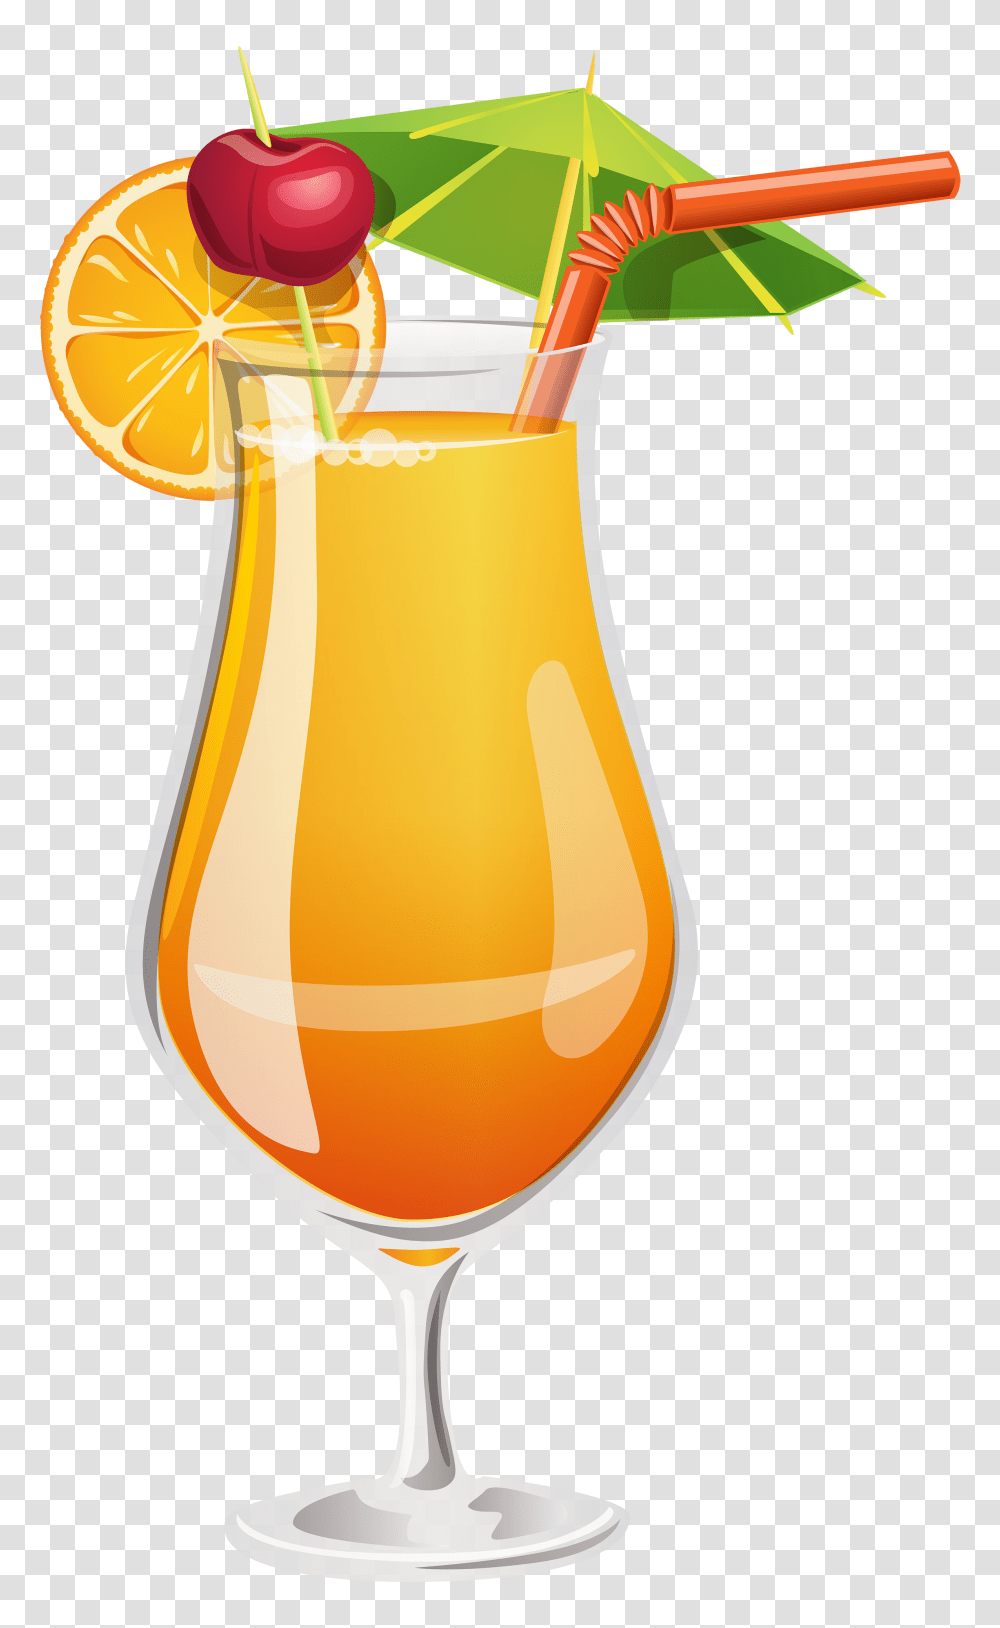 Juice Clipart Background Cocktail Clipart Beverage Drink Orange Juice Lamp Transparent Png Pngset Com